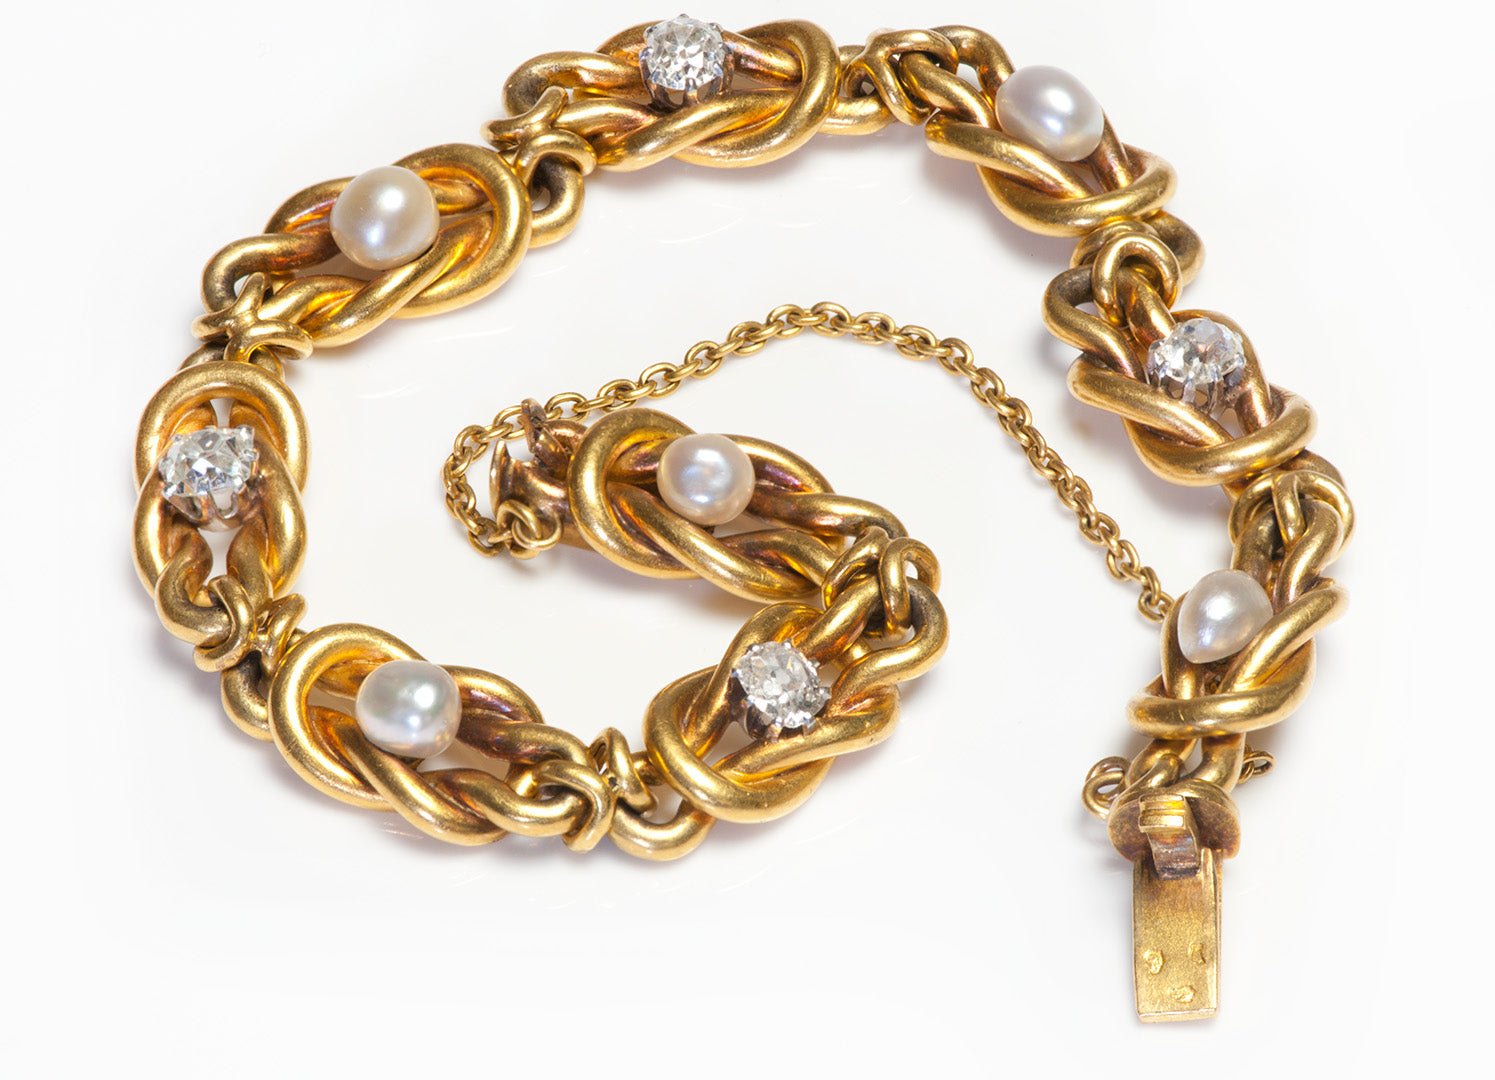 Antique French 18K Gold Old Mine Cut Diamond Pearl Knot Bracelet